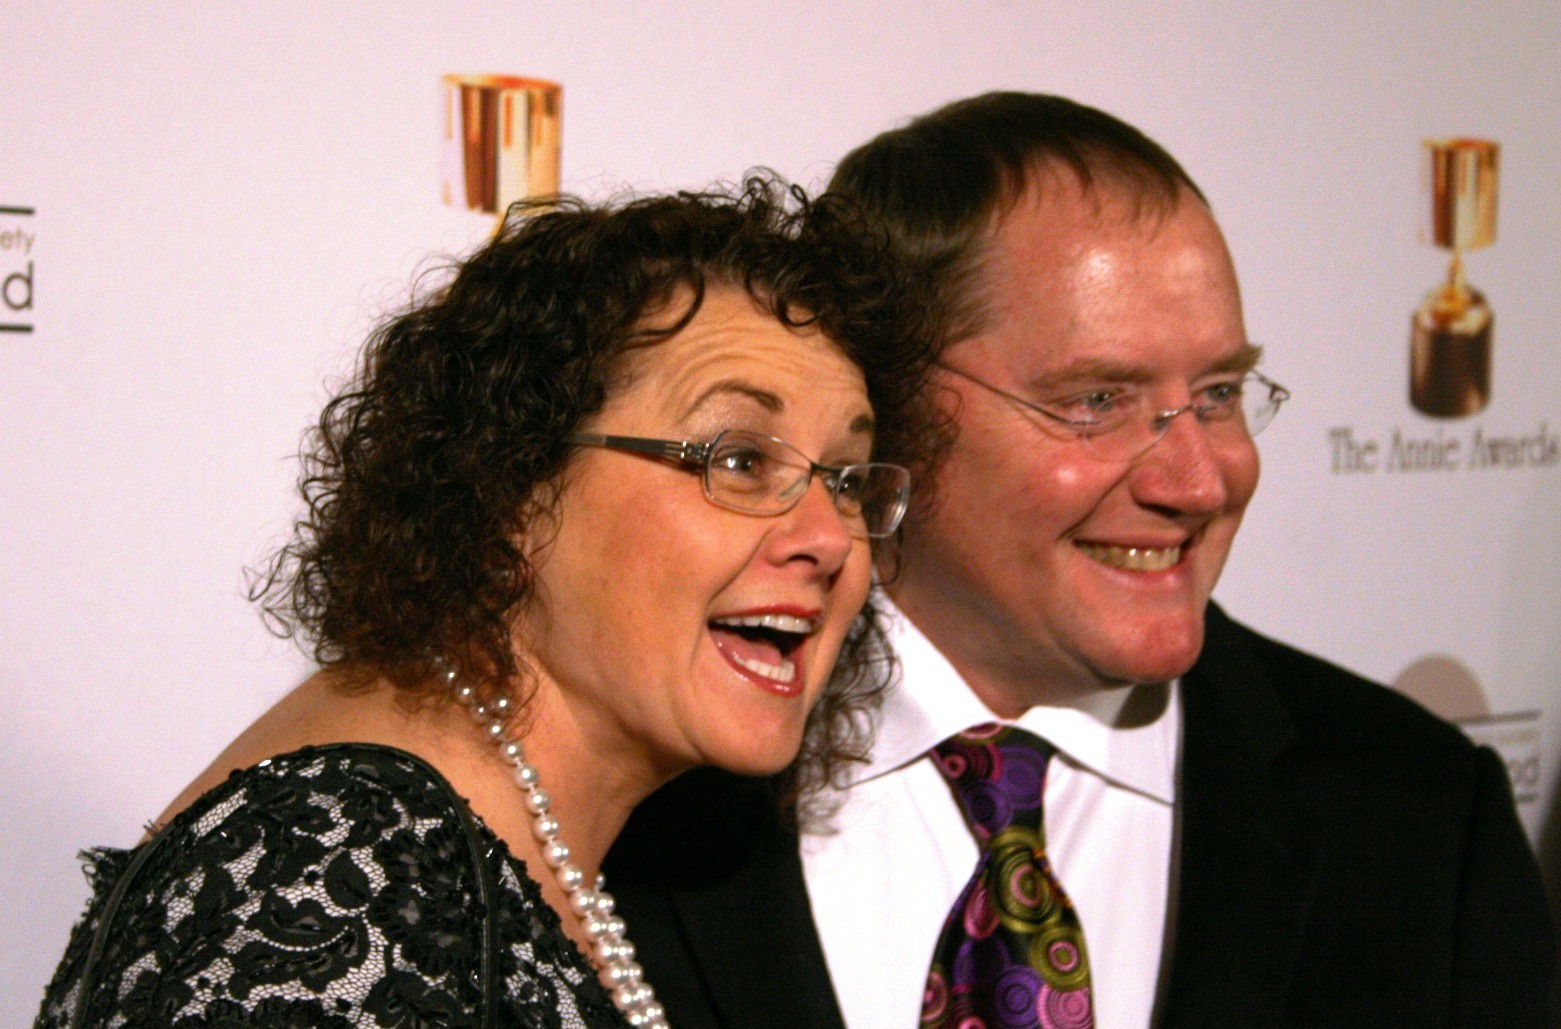 John Lasseter and his wife, Nancy